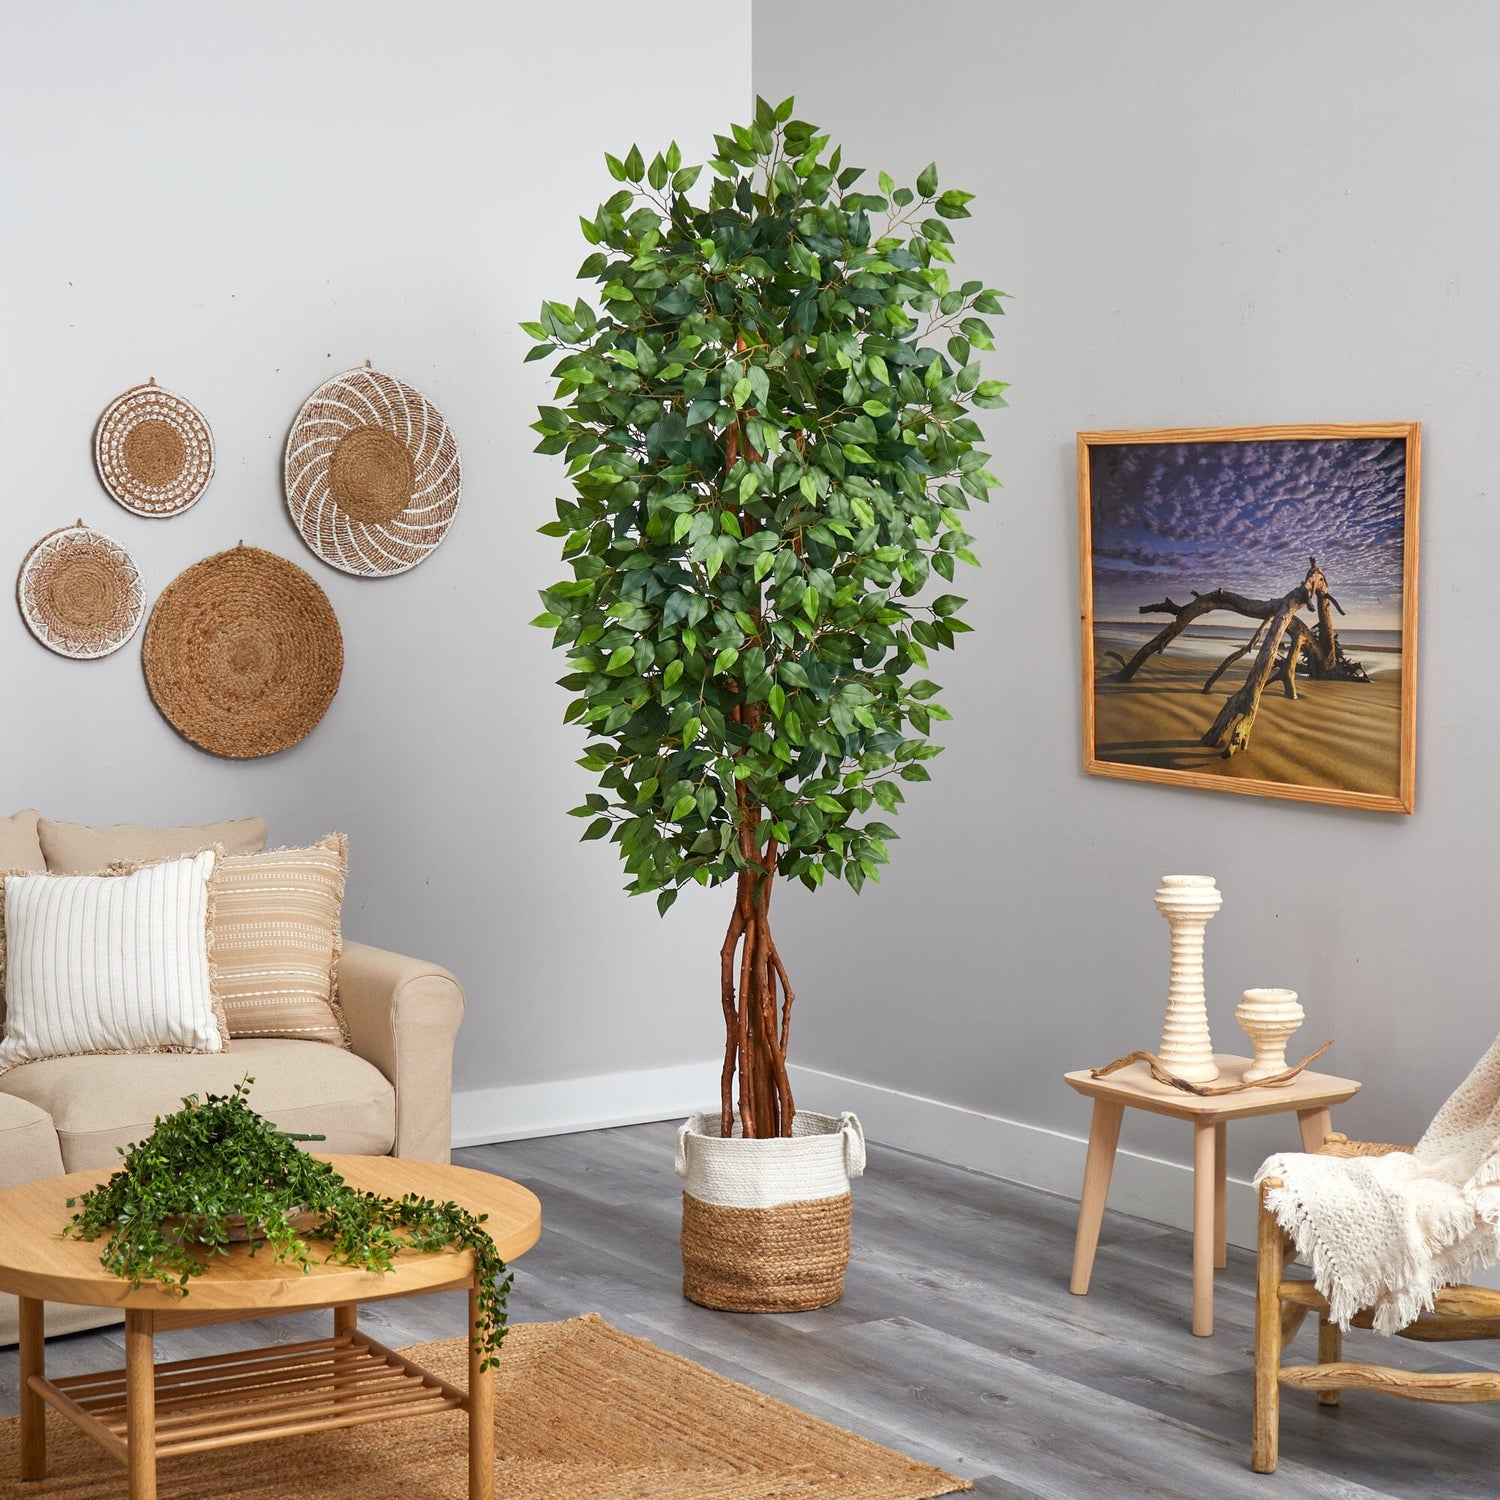 7.5' Artificial Deluxe Ficus Tree with Handmade Jute & Cotton Basket